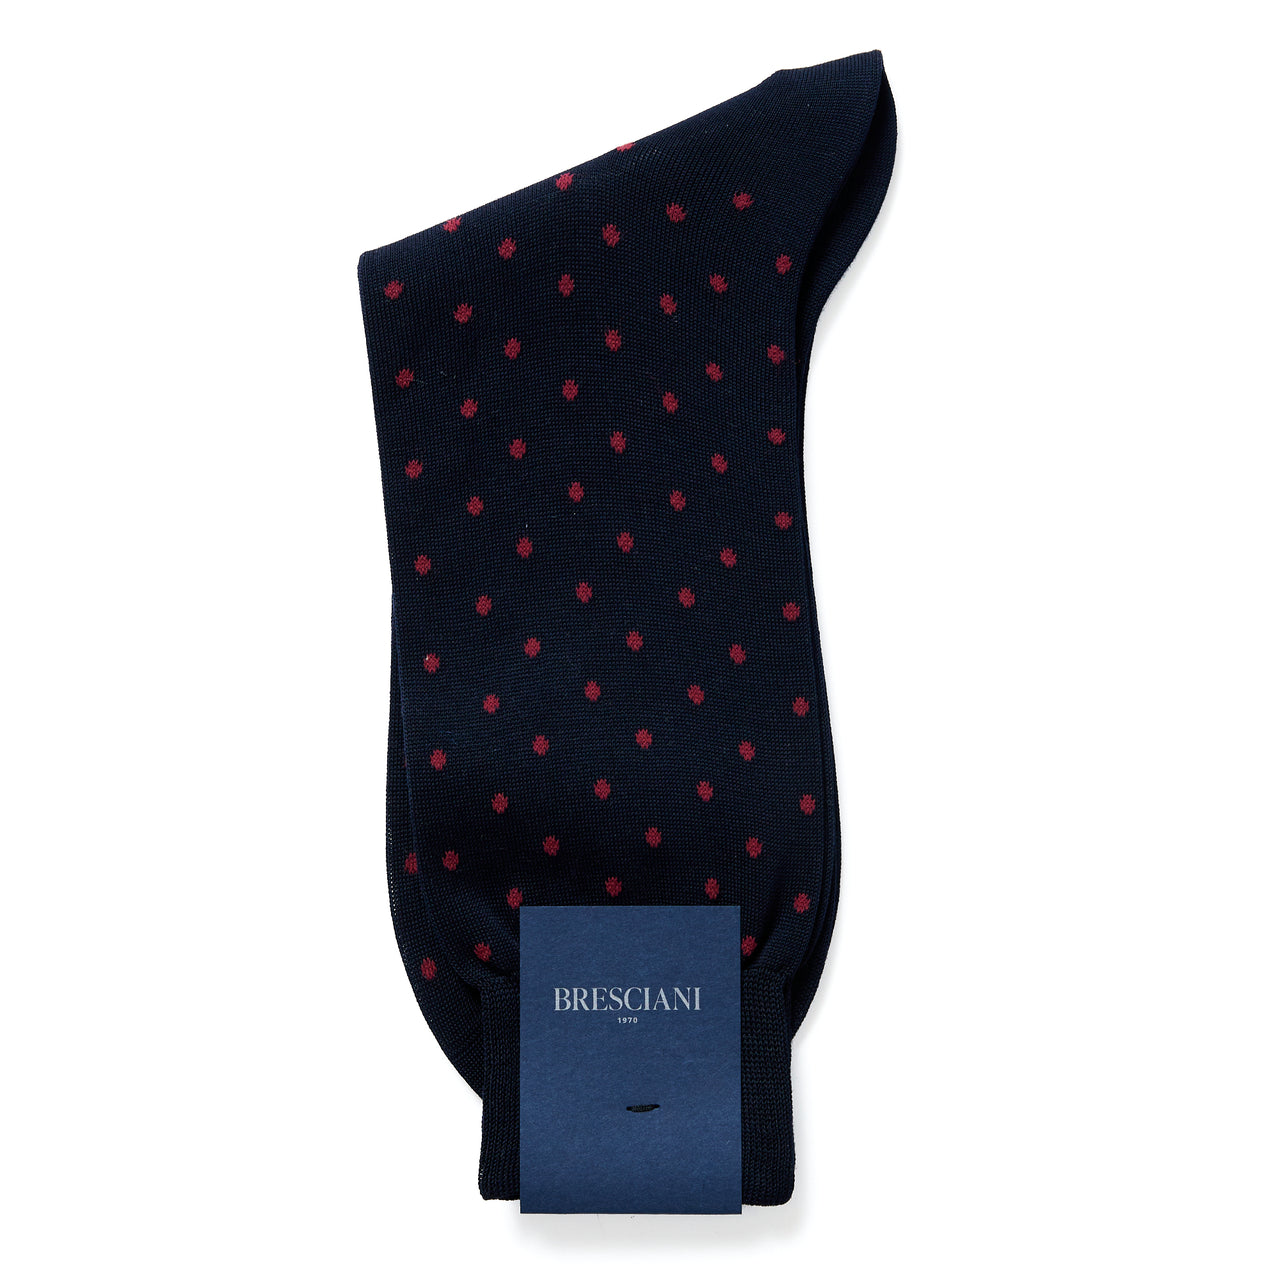 BRESCIANI Polka Dot Business Socks NAVY/RED